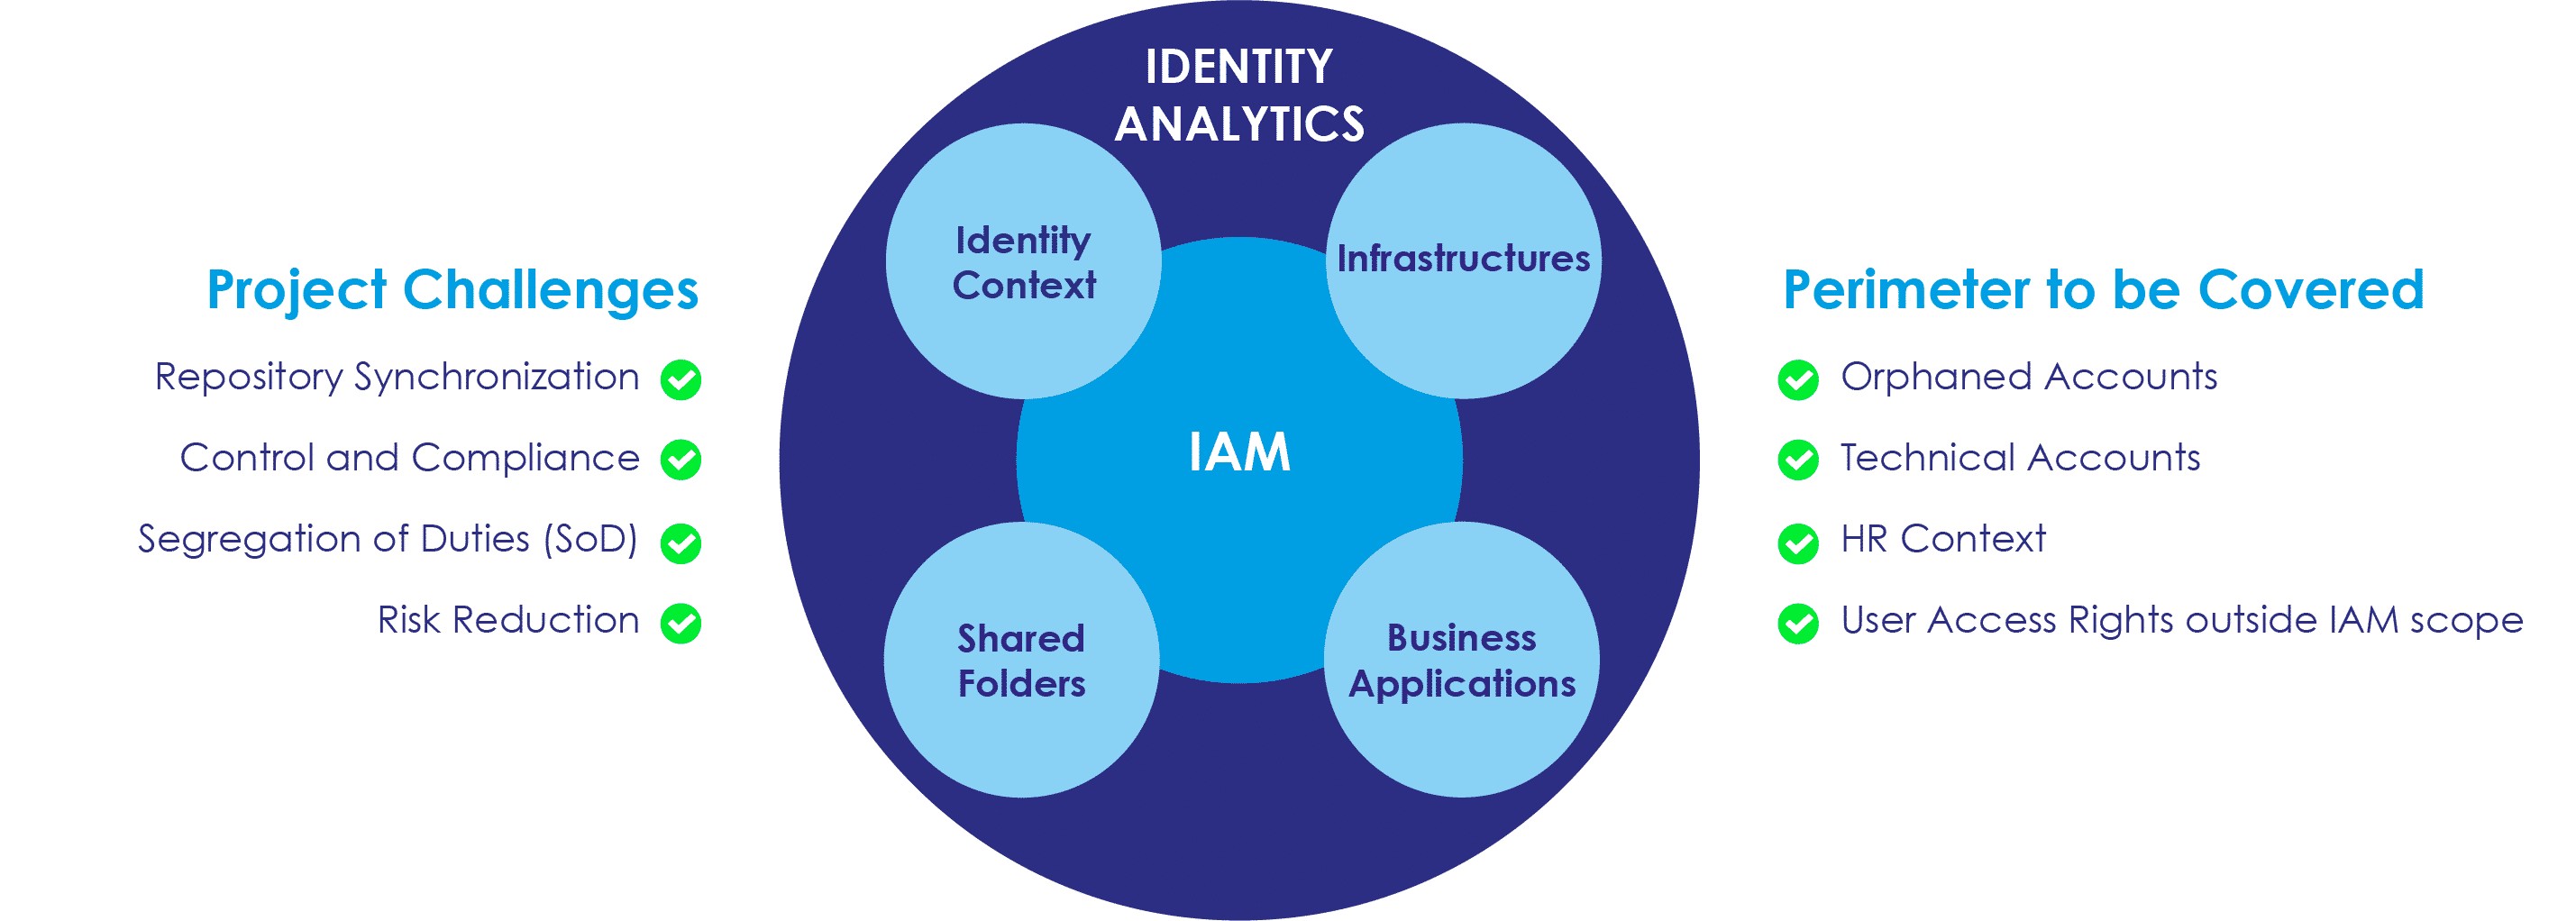 IGA Solution With Identity Analytics